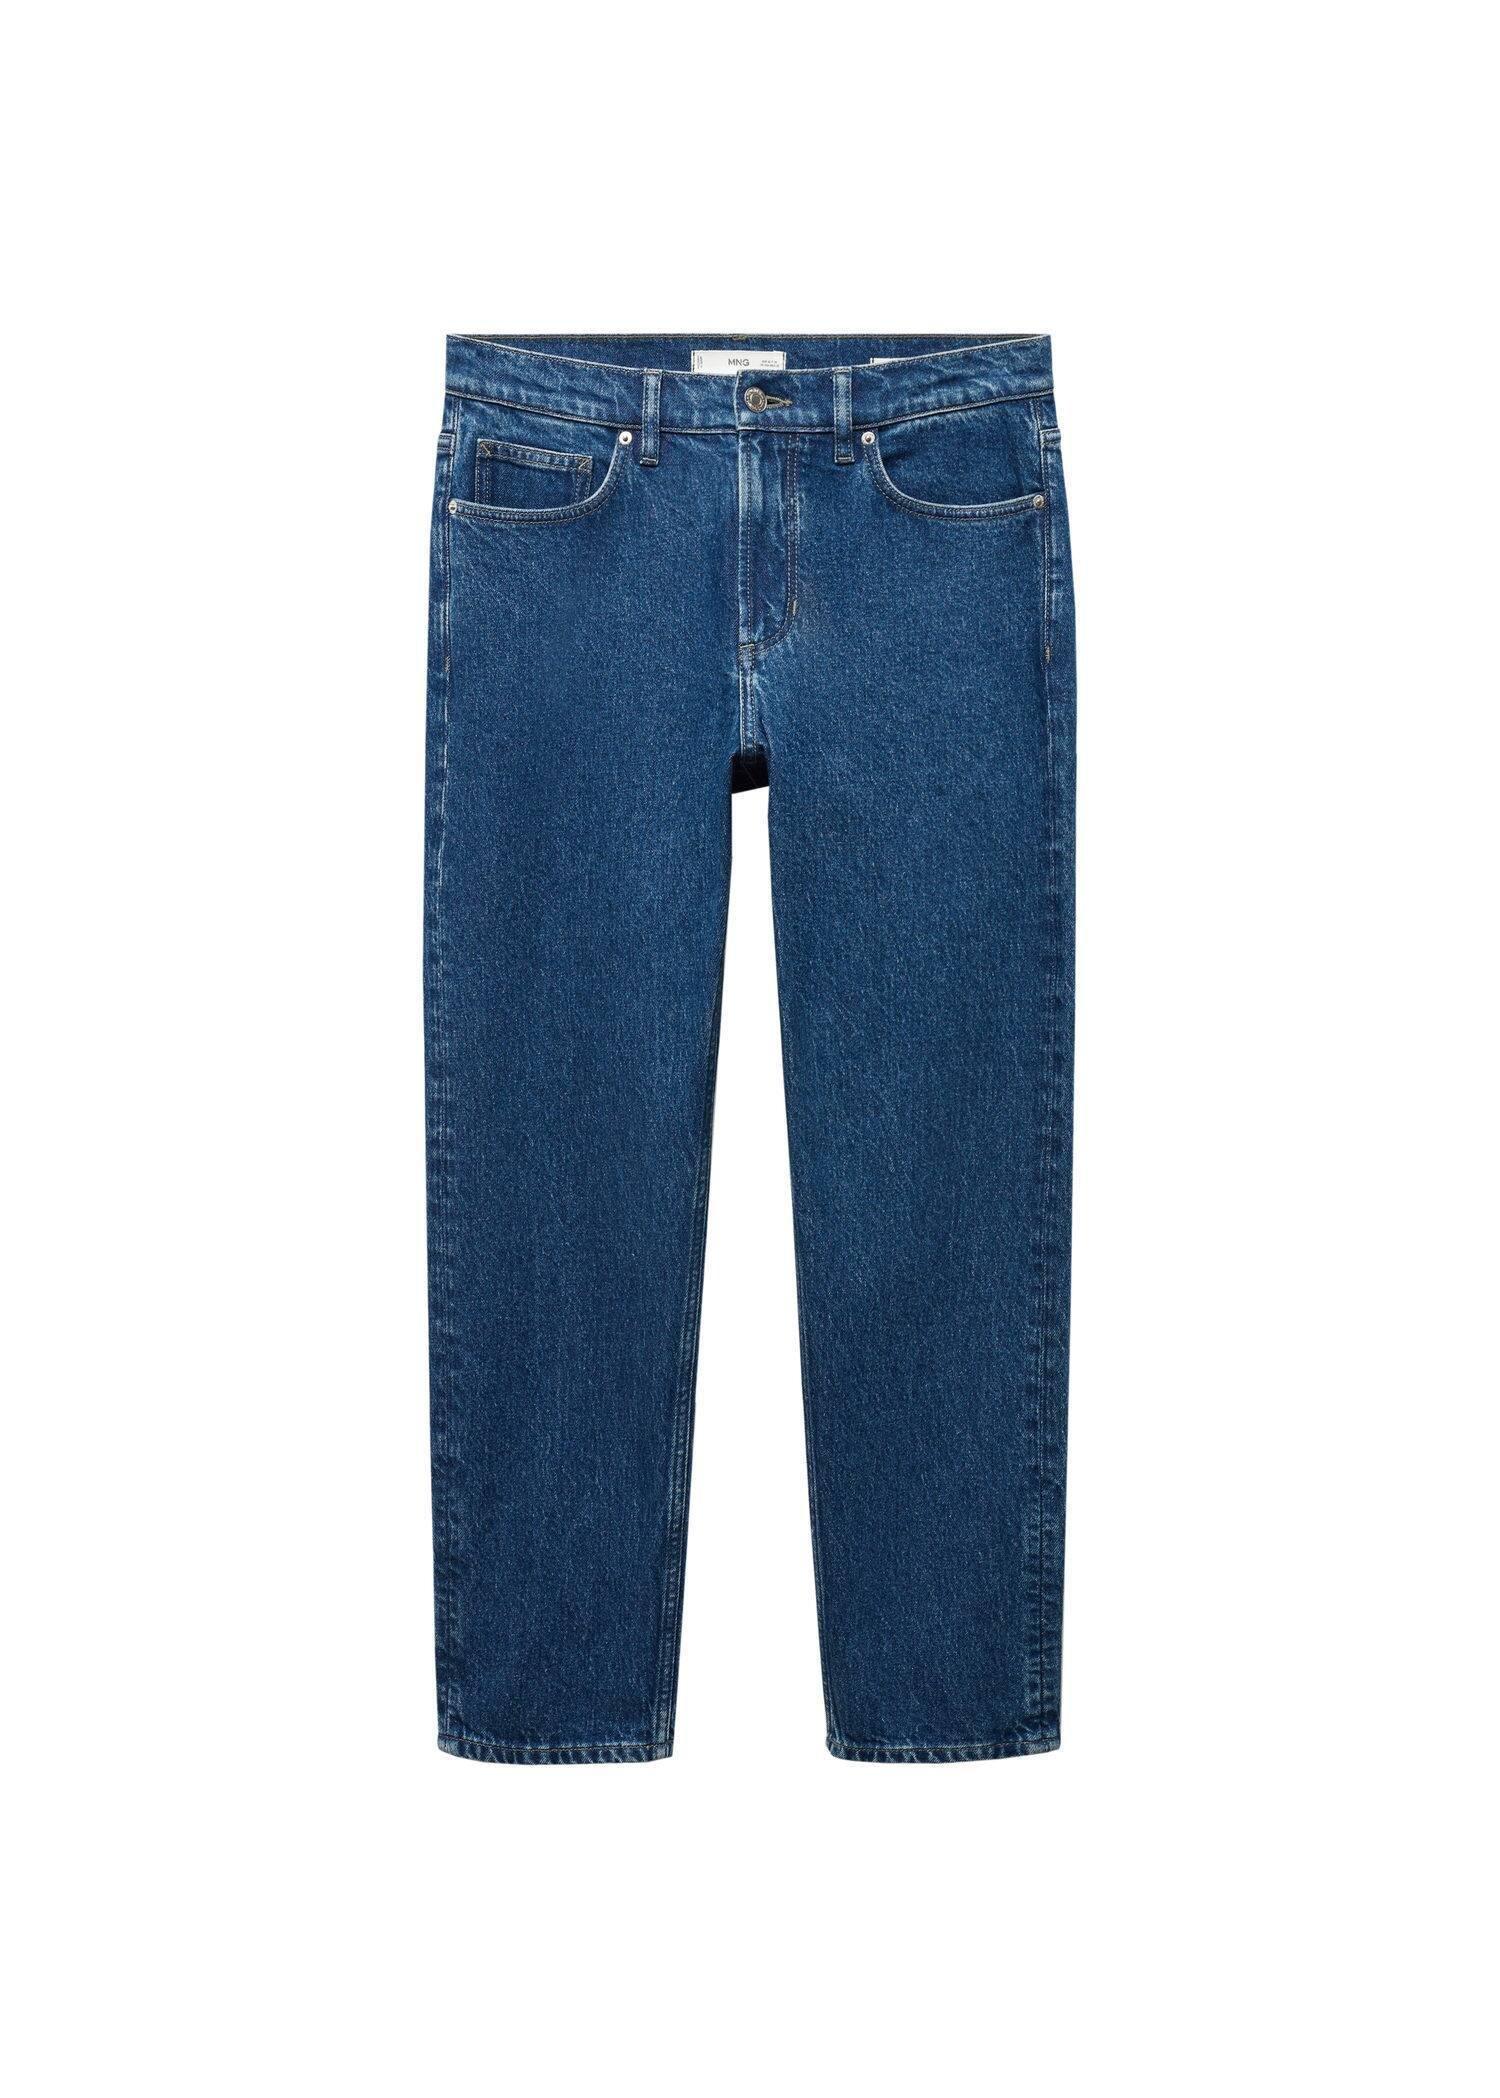 Mango - Blue Cropped Jeans